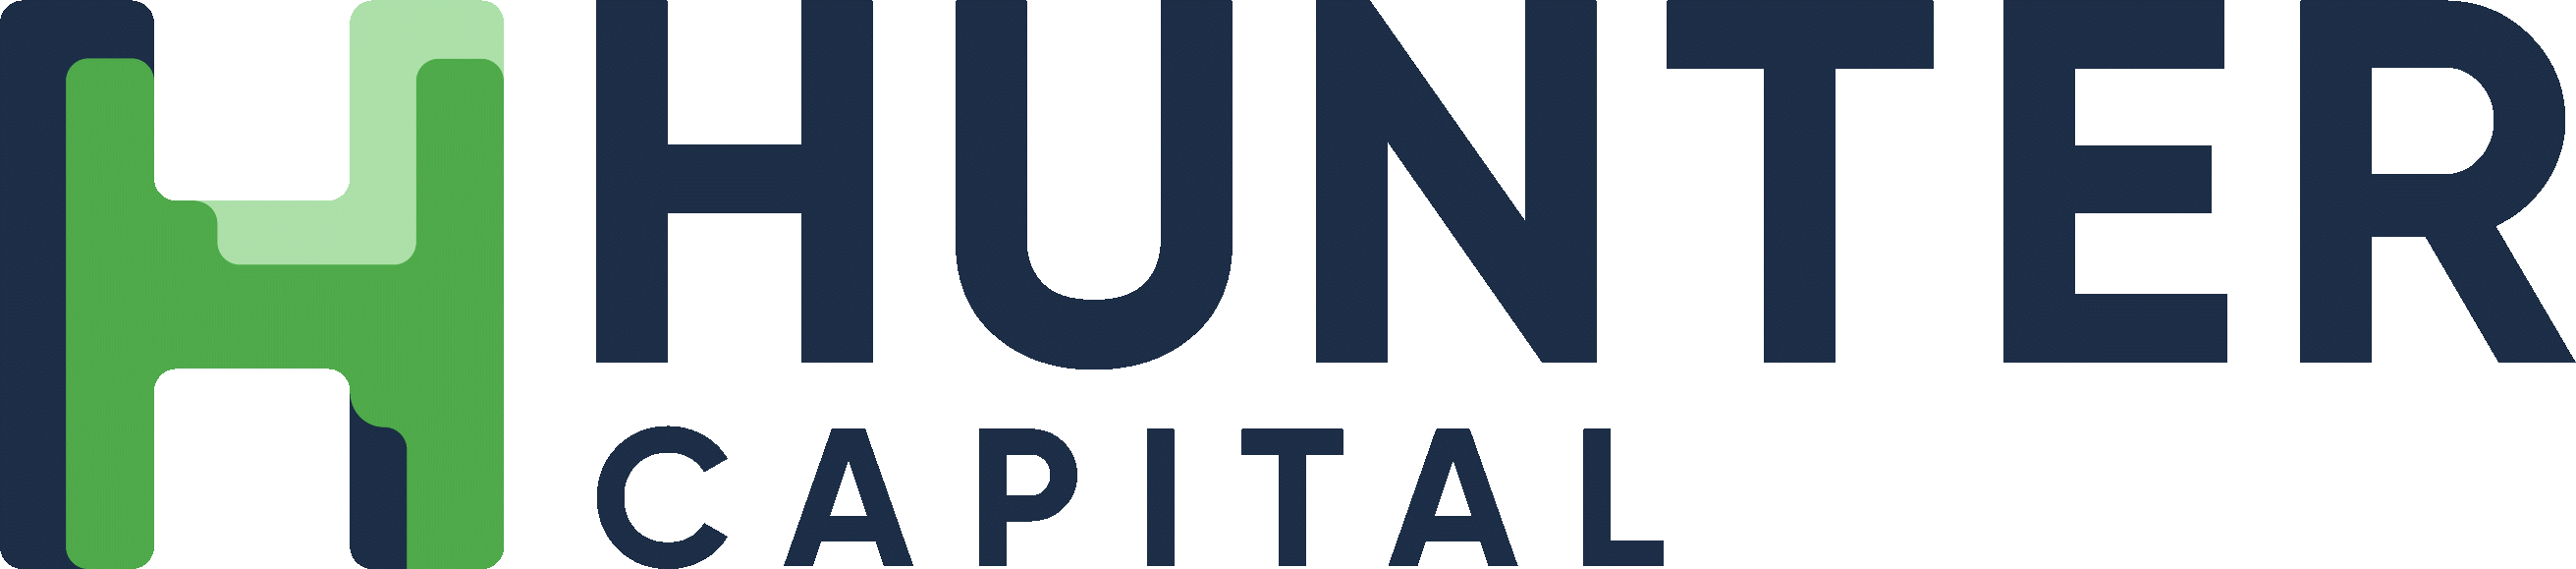 Hunter Capital AB Logo